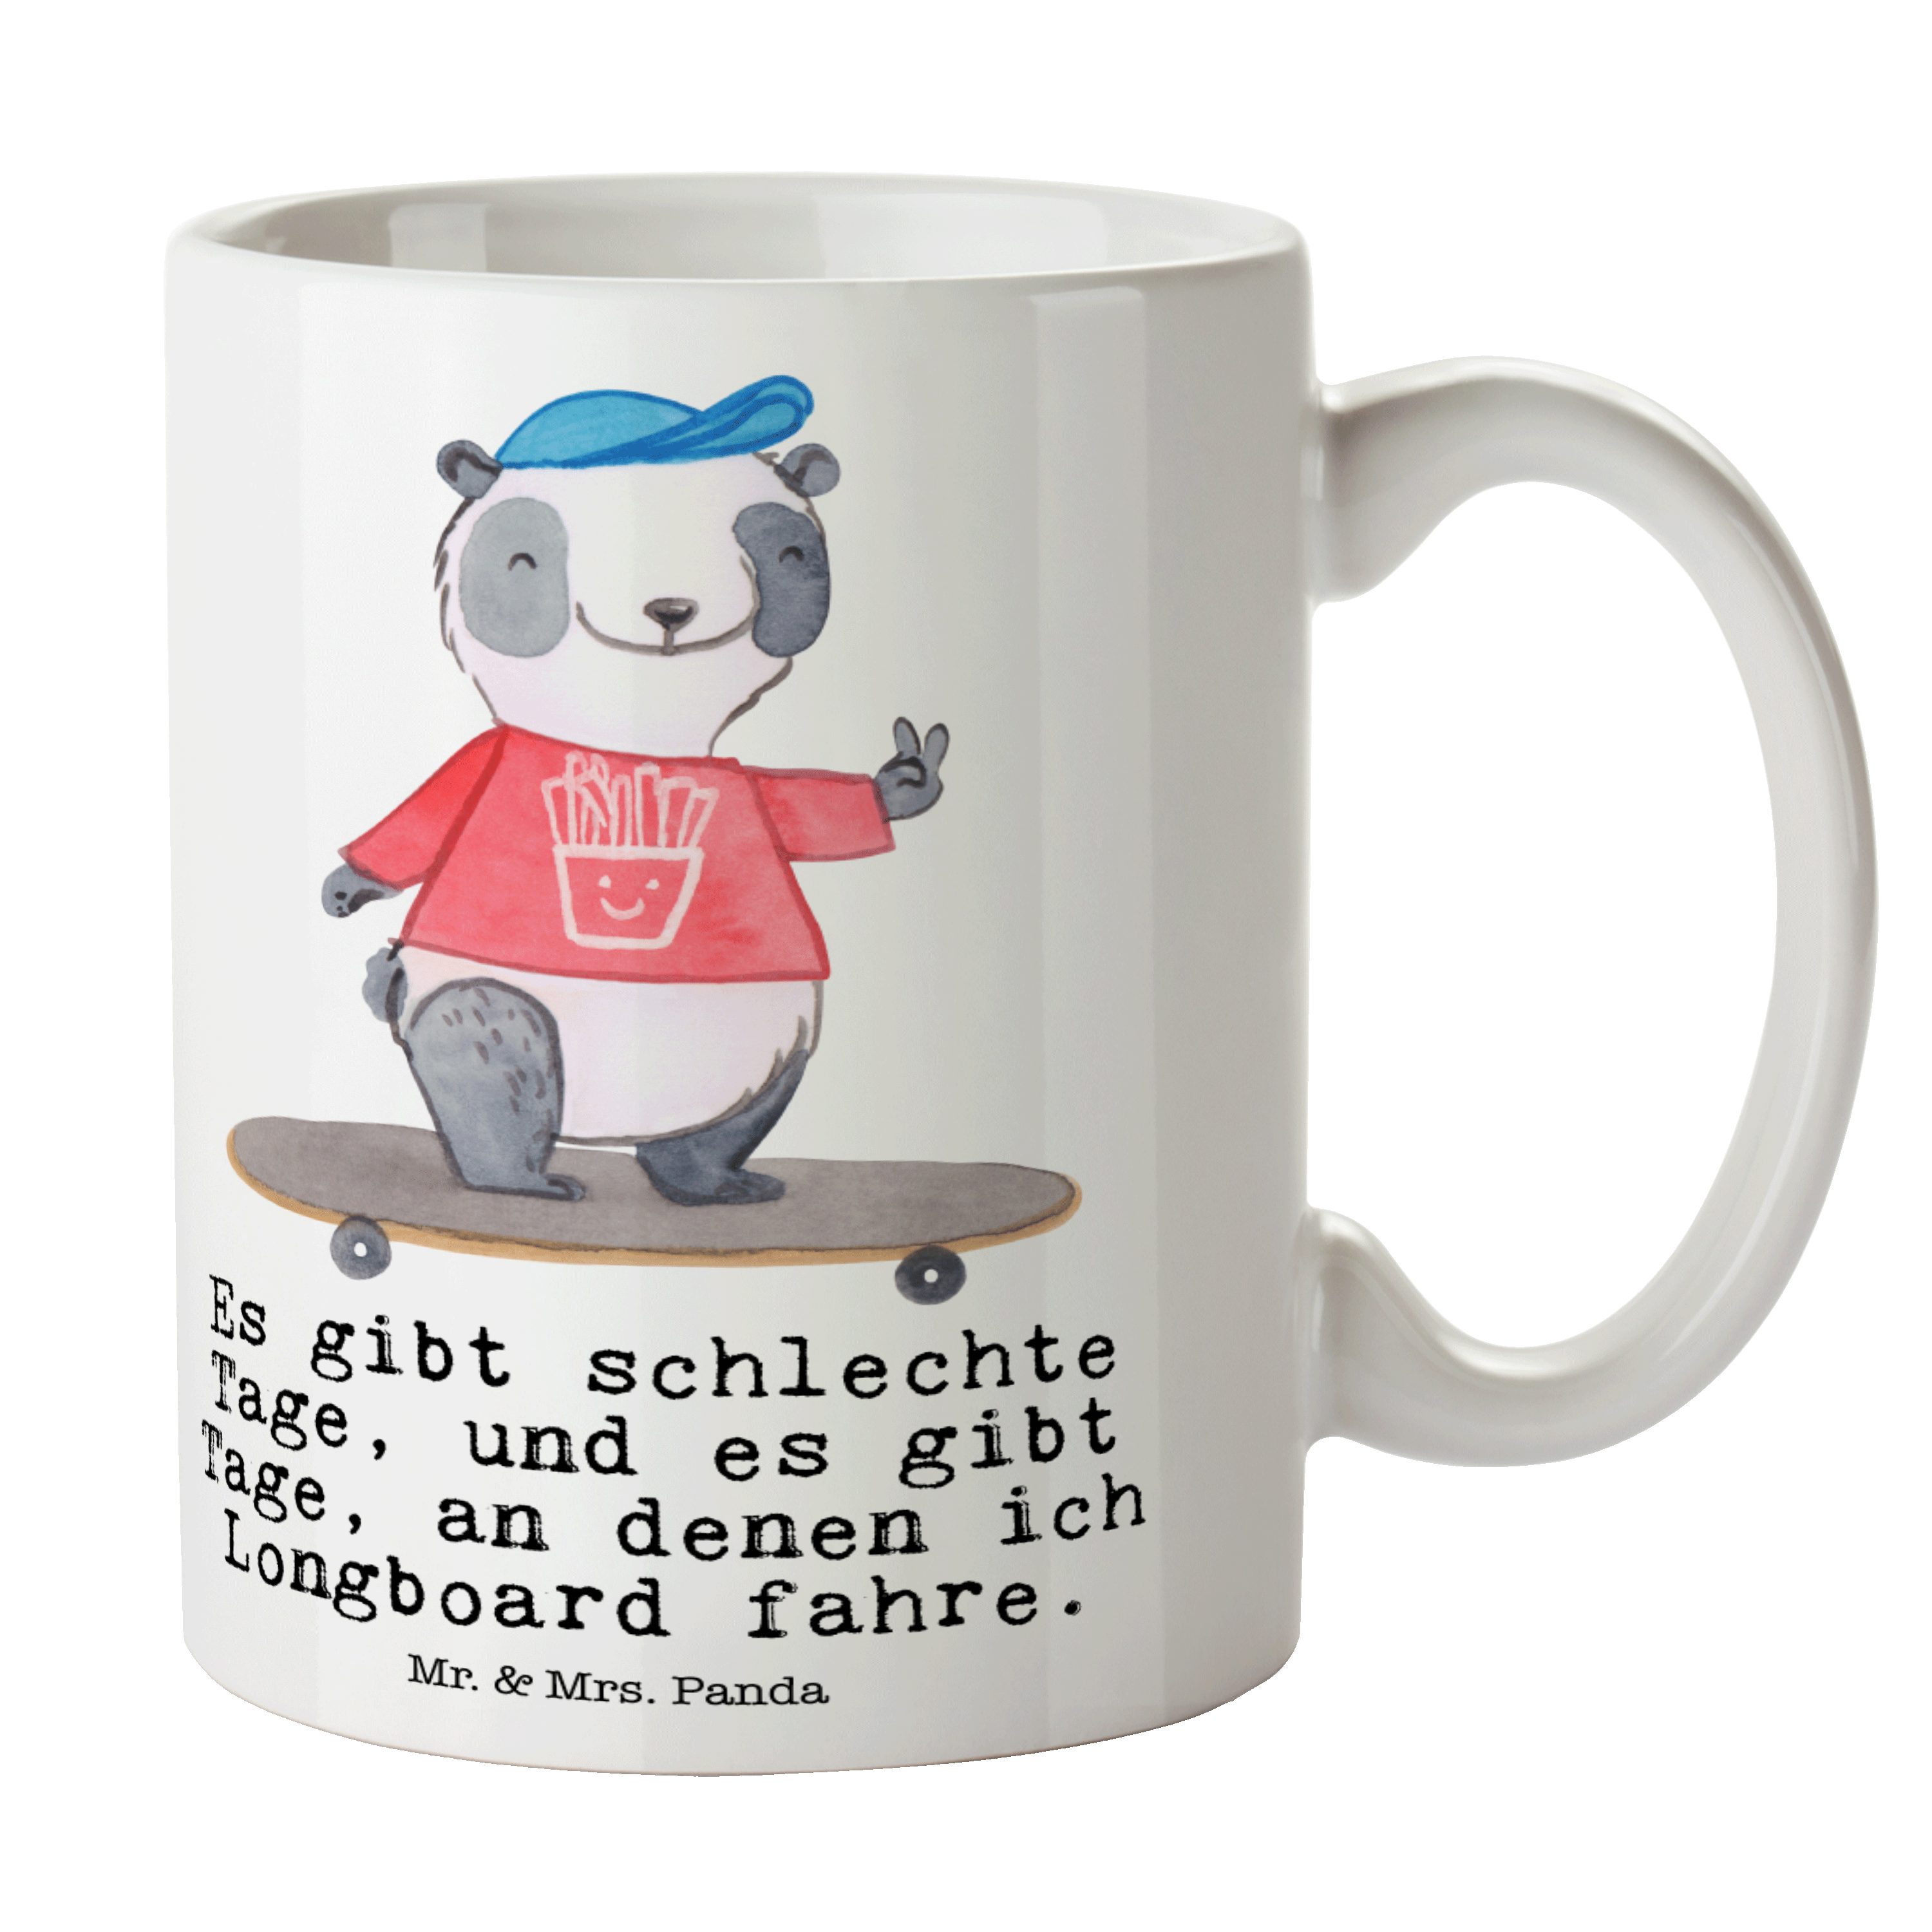 Mr. & Mrs. Panda Tasse Panda Longboard fahren Tage - Weiß - Geschenk, Tasse, Teebecher, Dank, Keramik